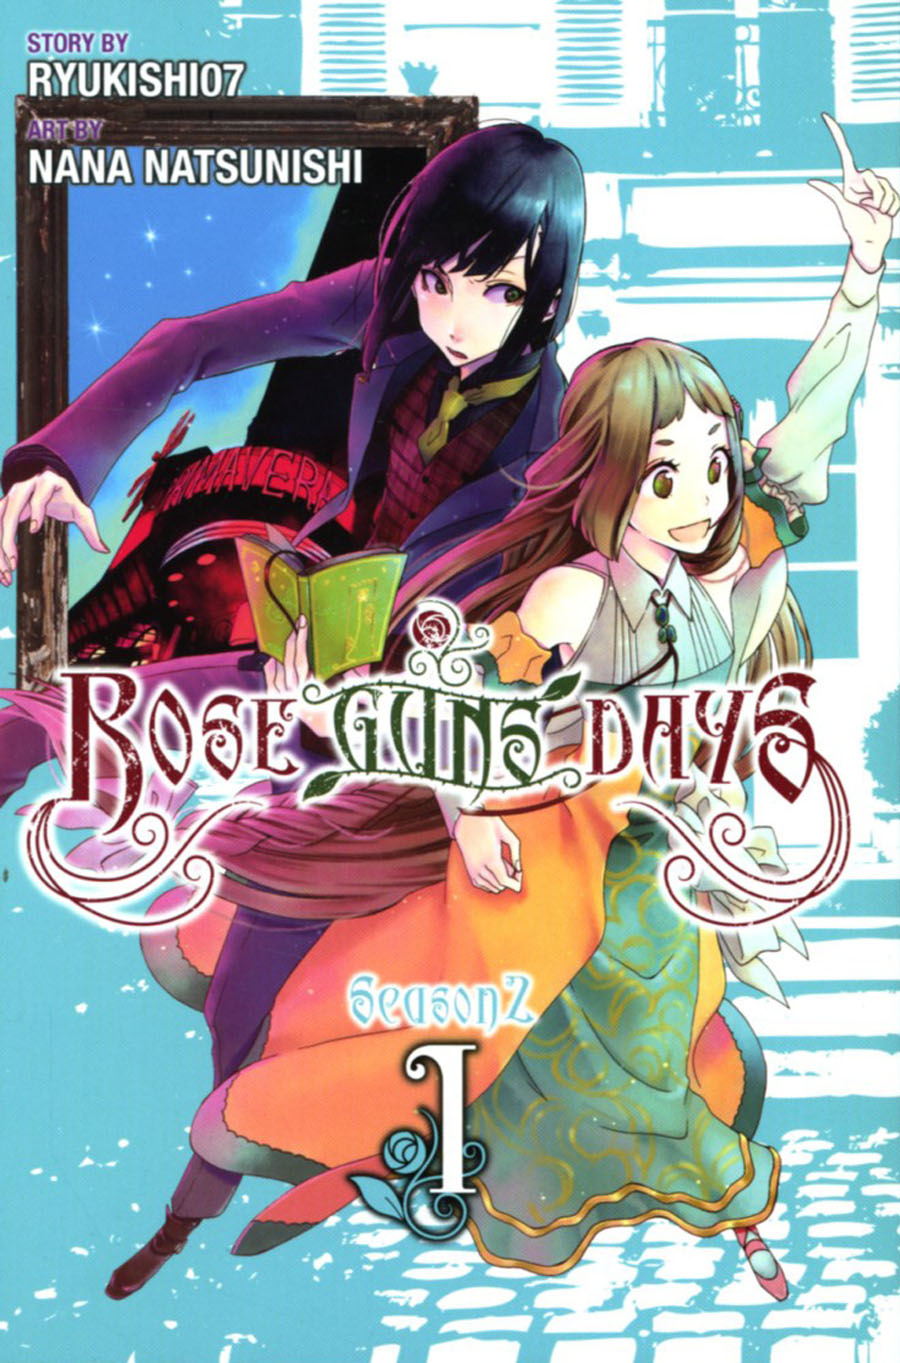 Rose Guns Days Season 2 Vol 1 GN